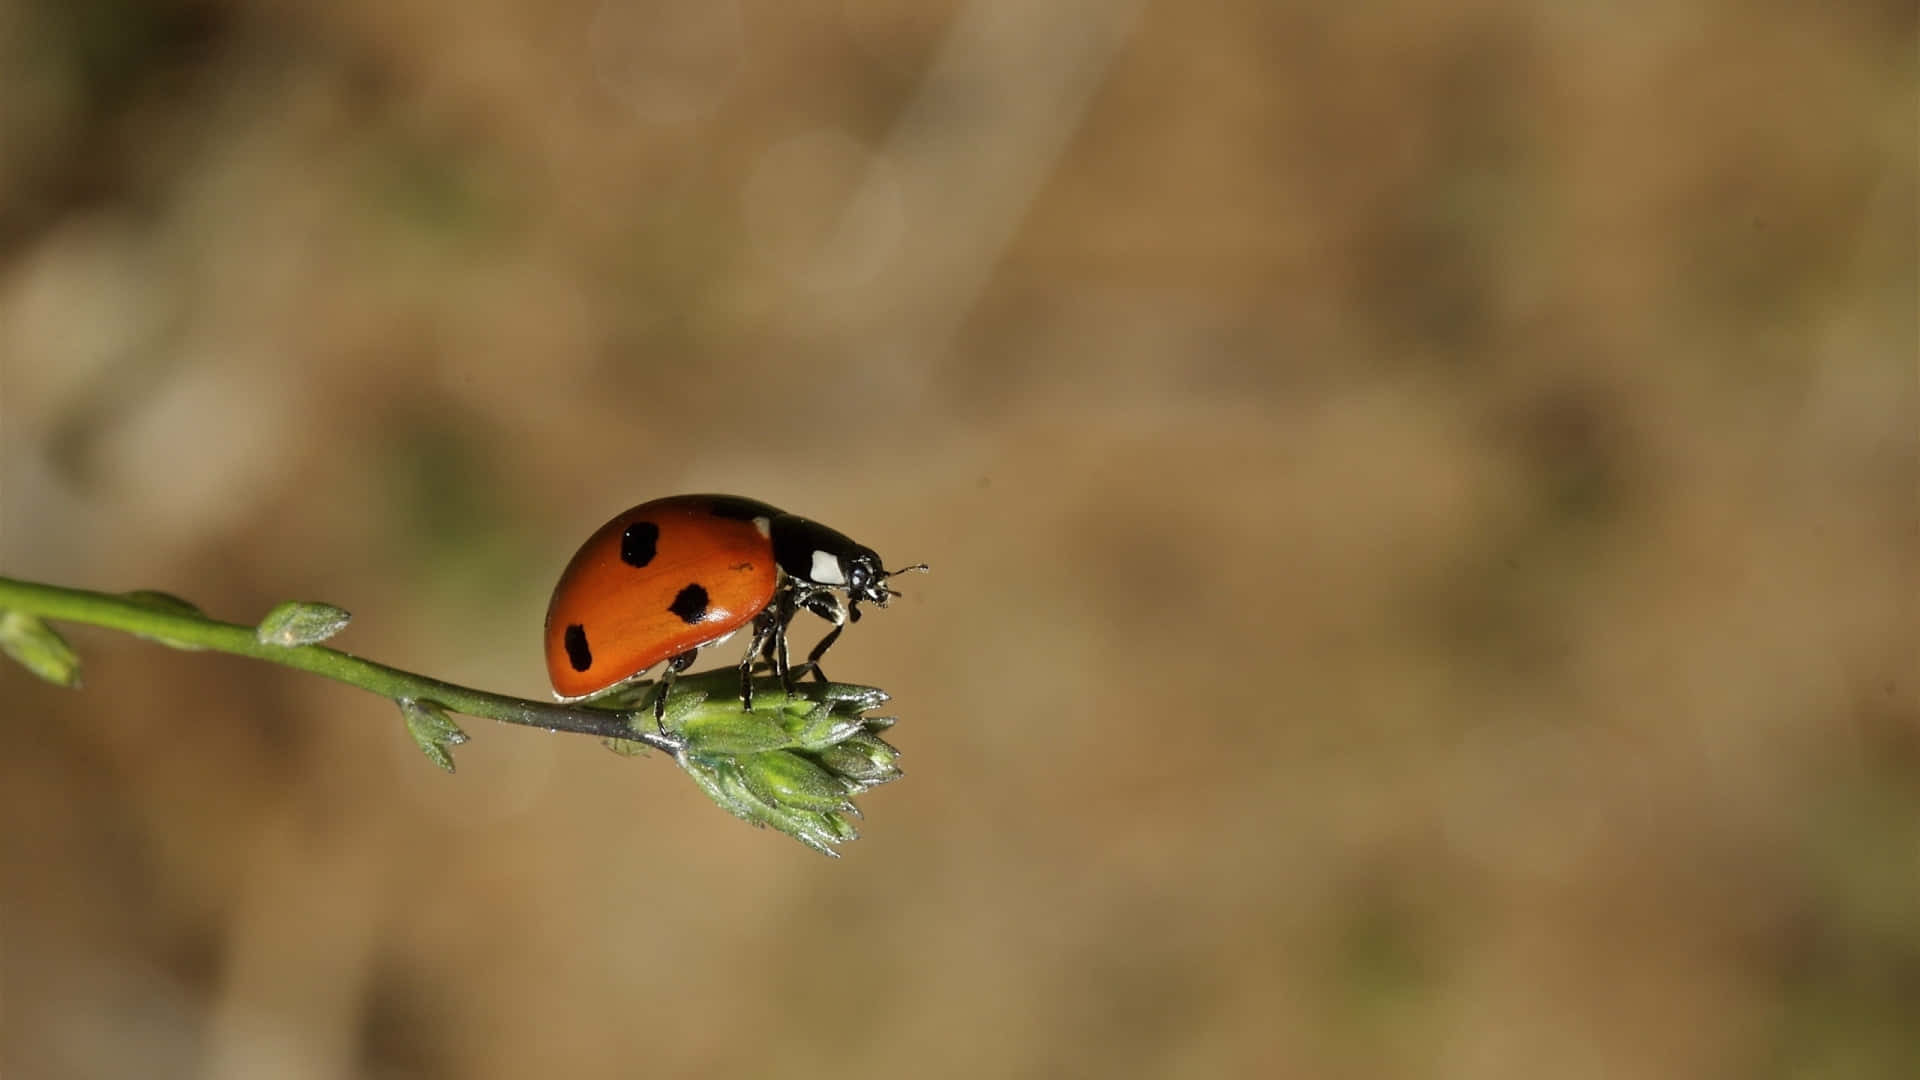 A Close-Up Look at a Ladybug